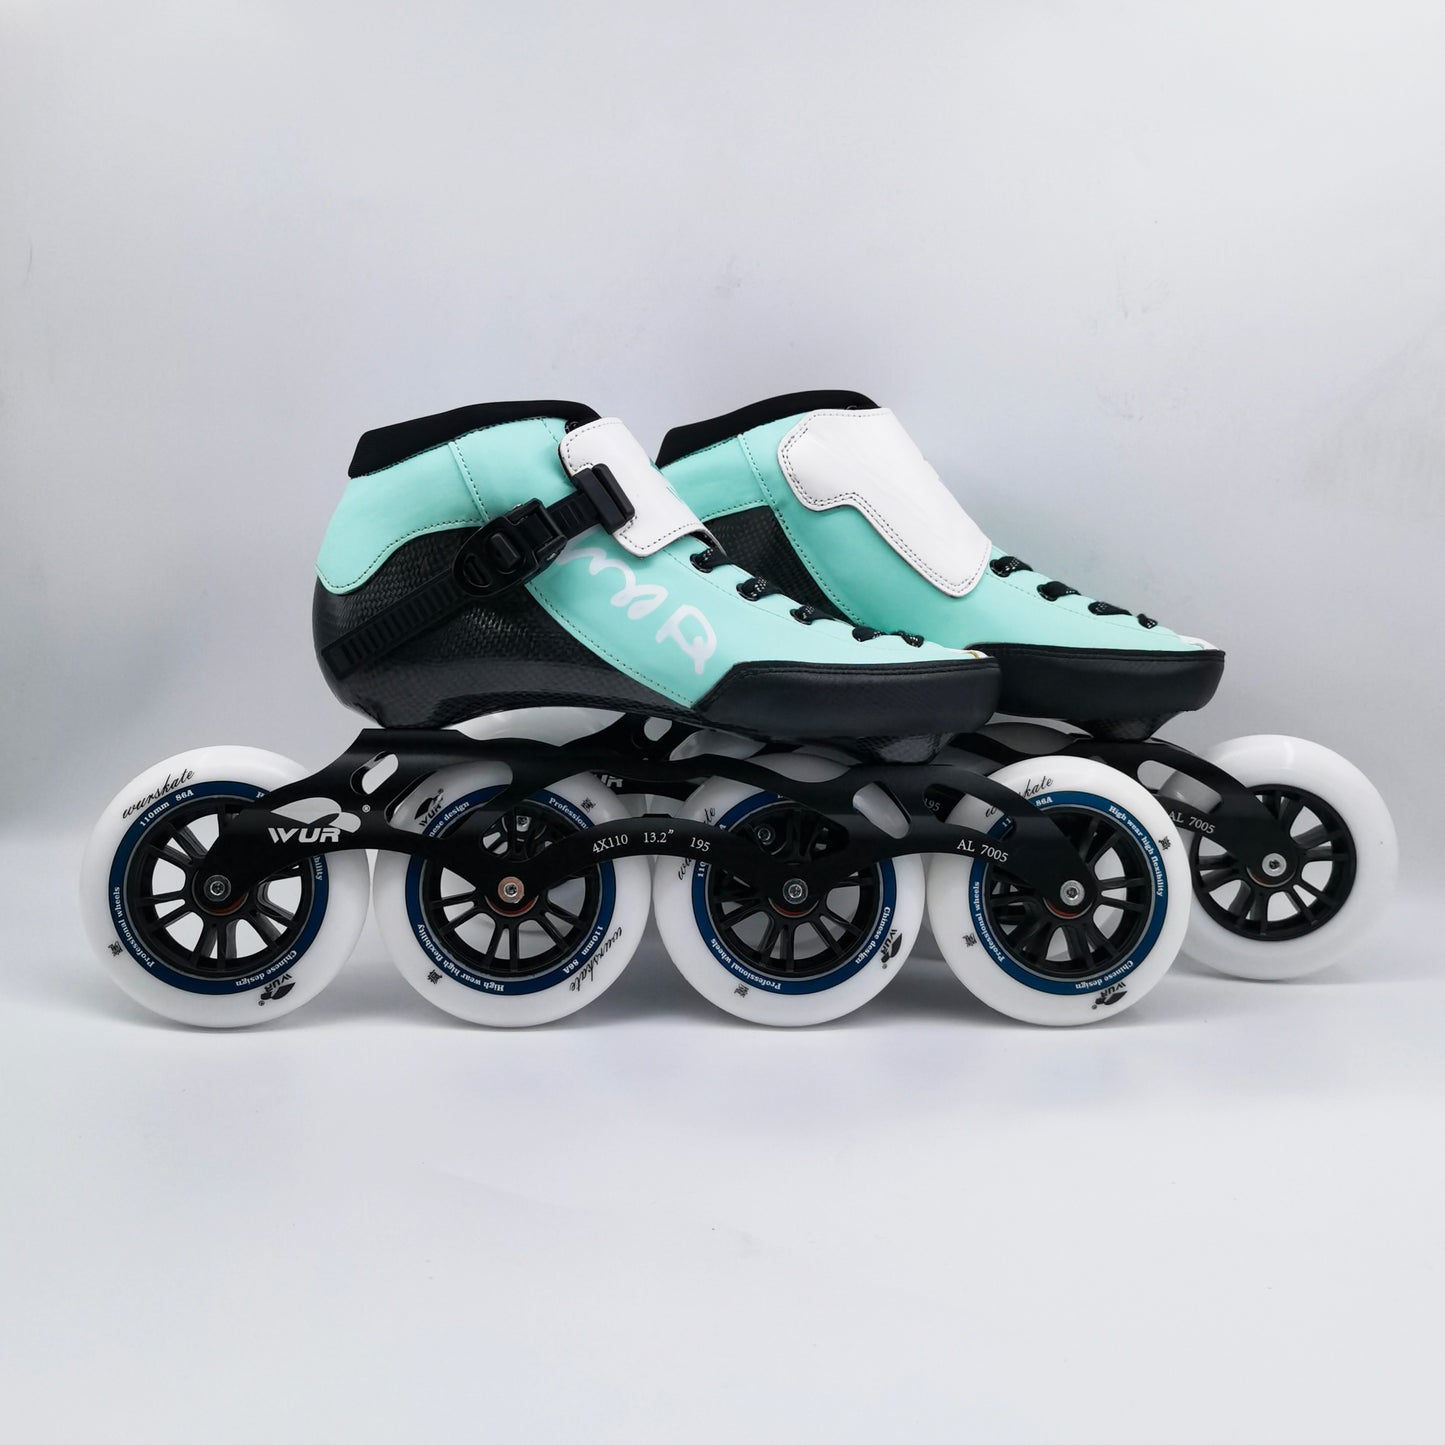 WUR skates inline speed skates carbon fiber Mint Green CX02 4*110mm in stock